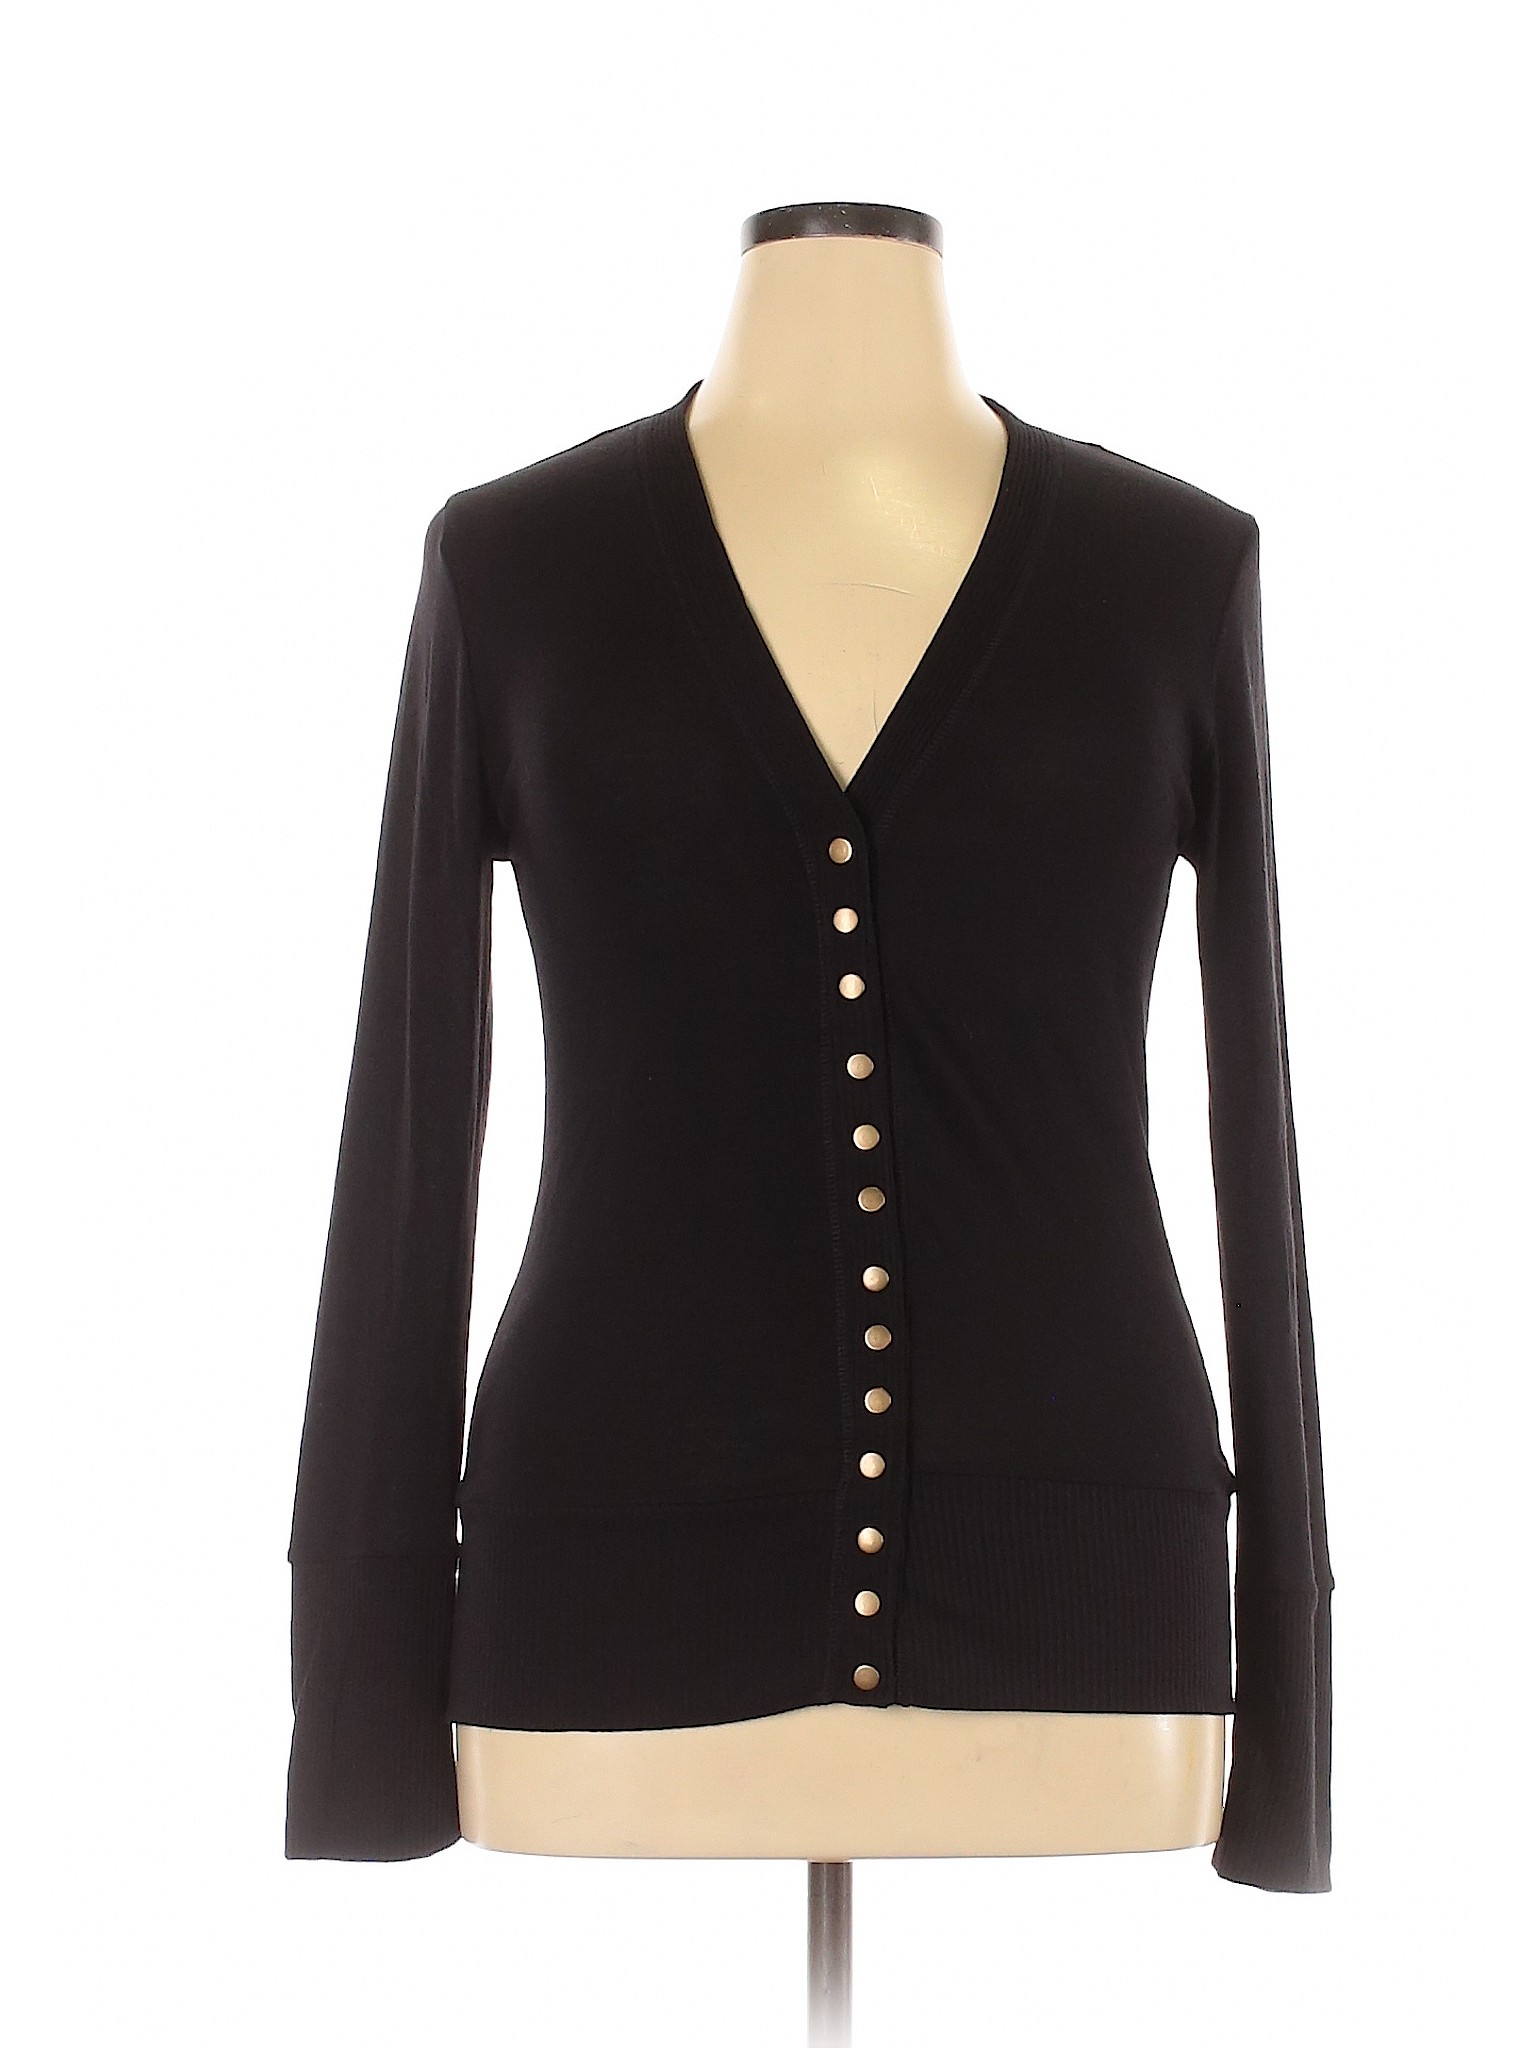 Zenana Outfitters Women Black Cardigan XL | eBay